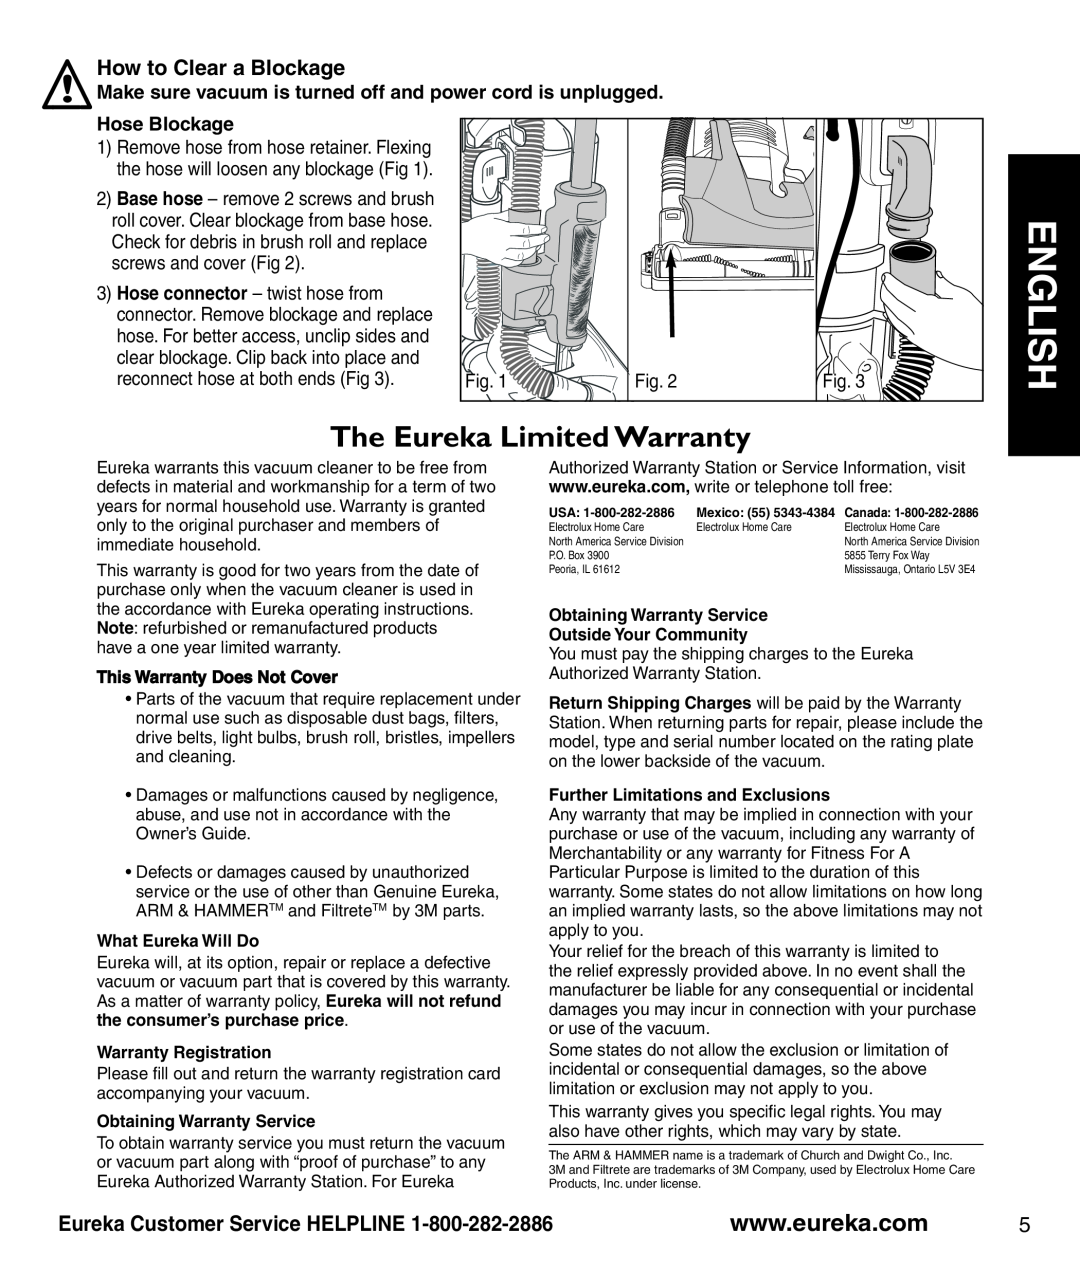 Eureka 3280 How to Clear a Blockage, Hose Blockage, English, The Eureka Limited Warranty, Eureka Customer Service HELPLINE 